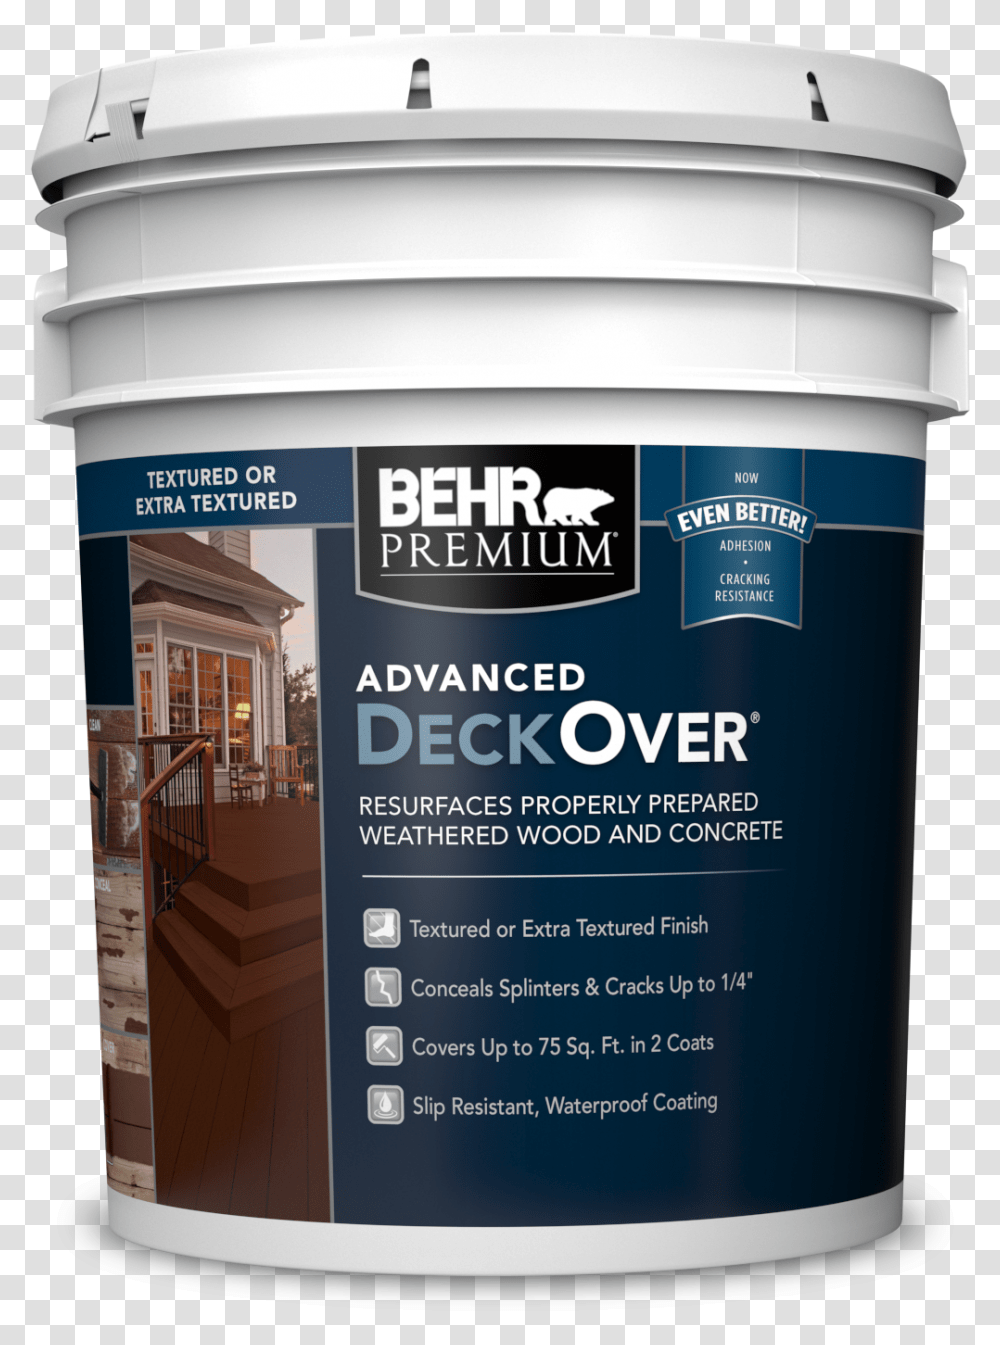 Behr Premium Advanced Deckover Textured 5 Gallon Image Behr Pro Exterior Satin, Paint Container, Bucket Transparent Png